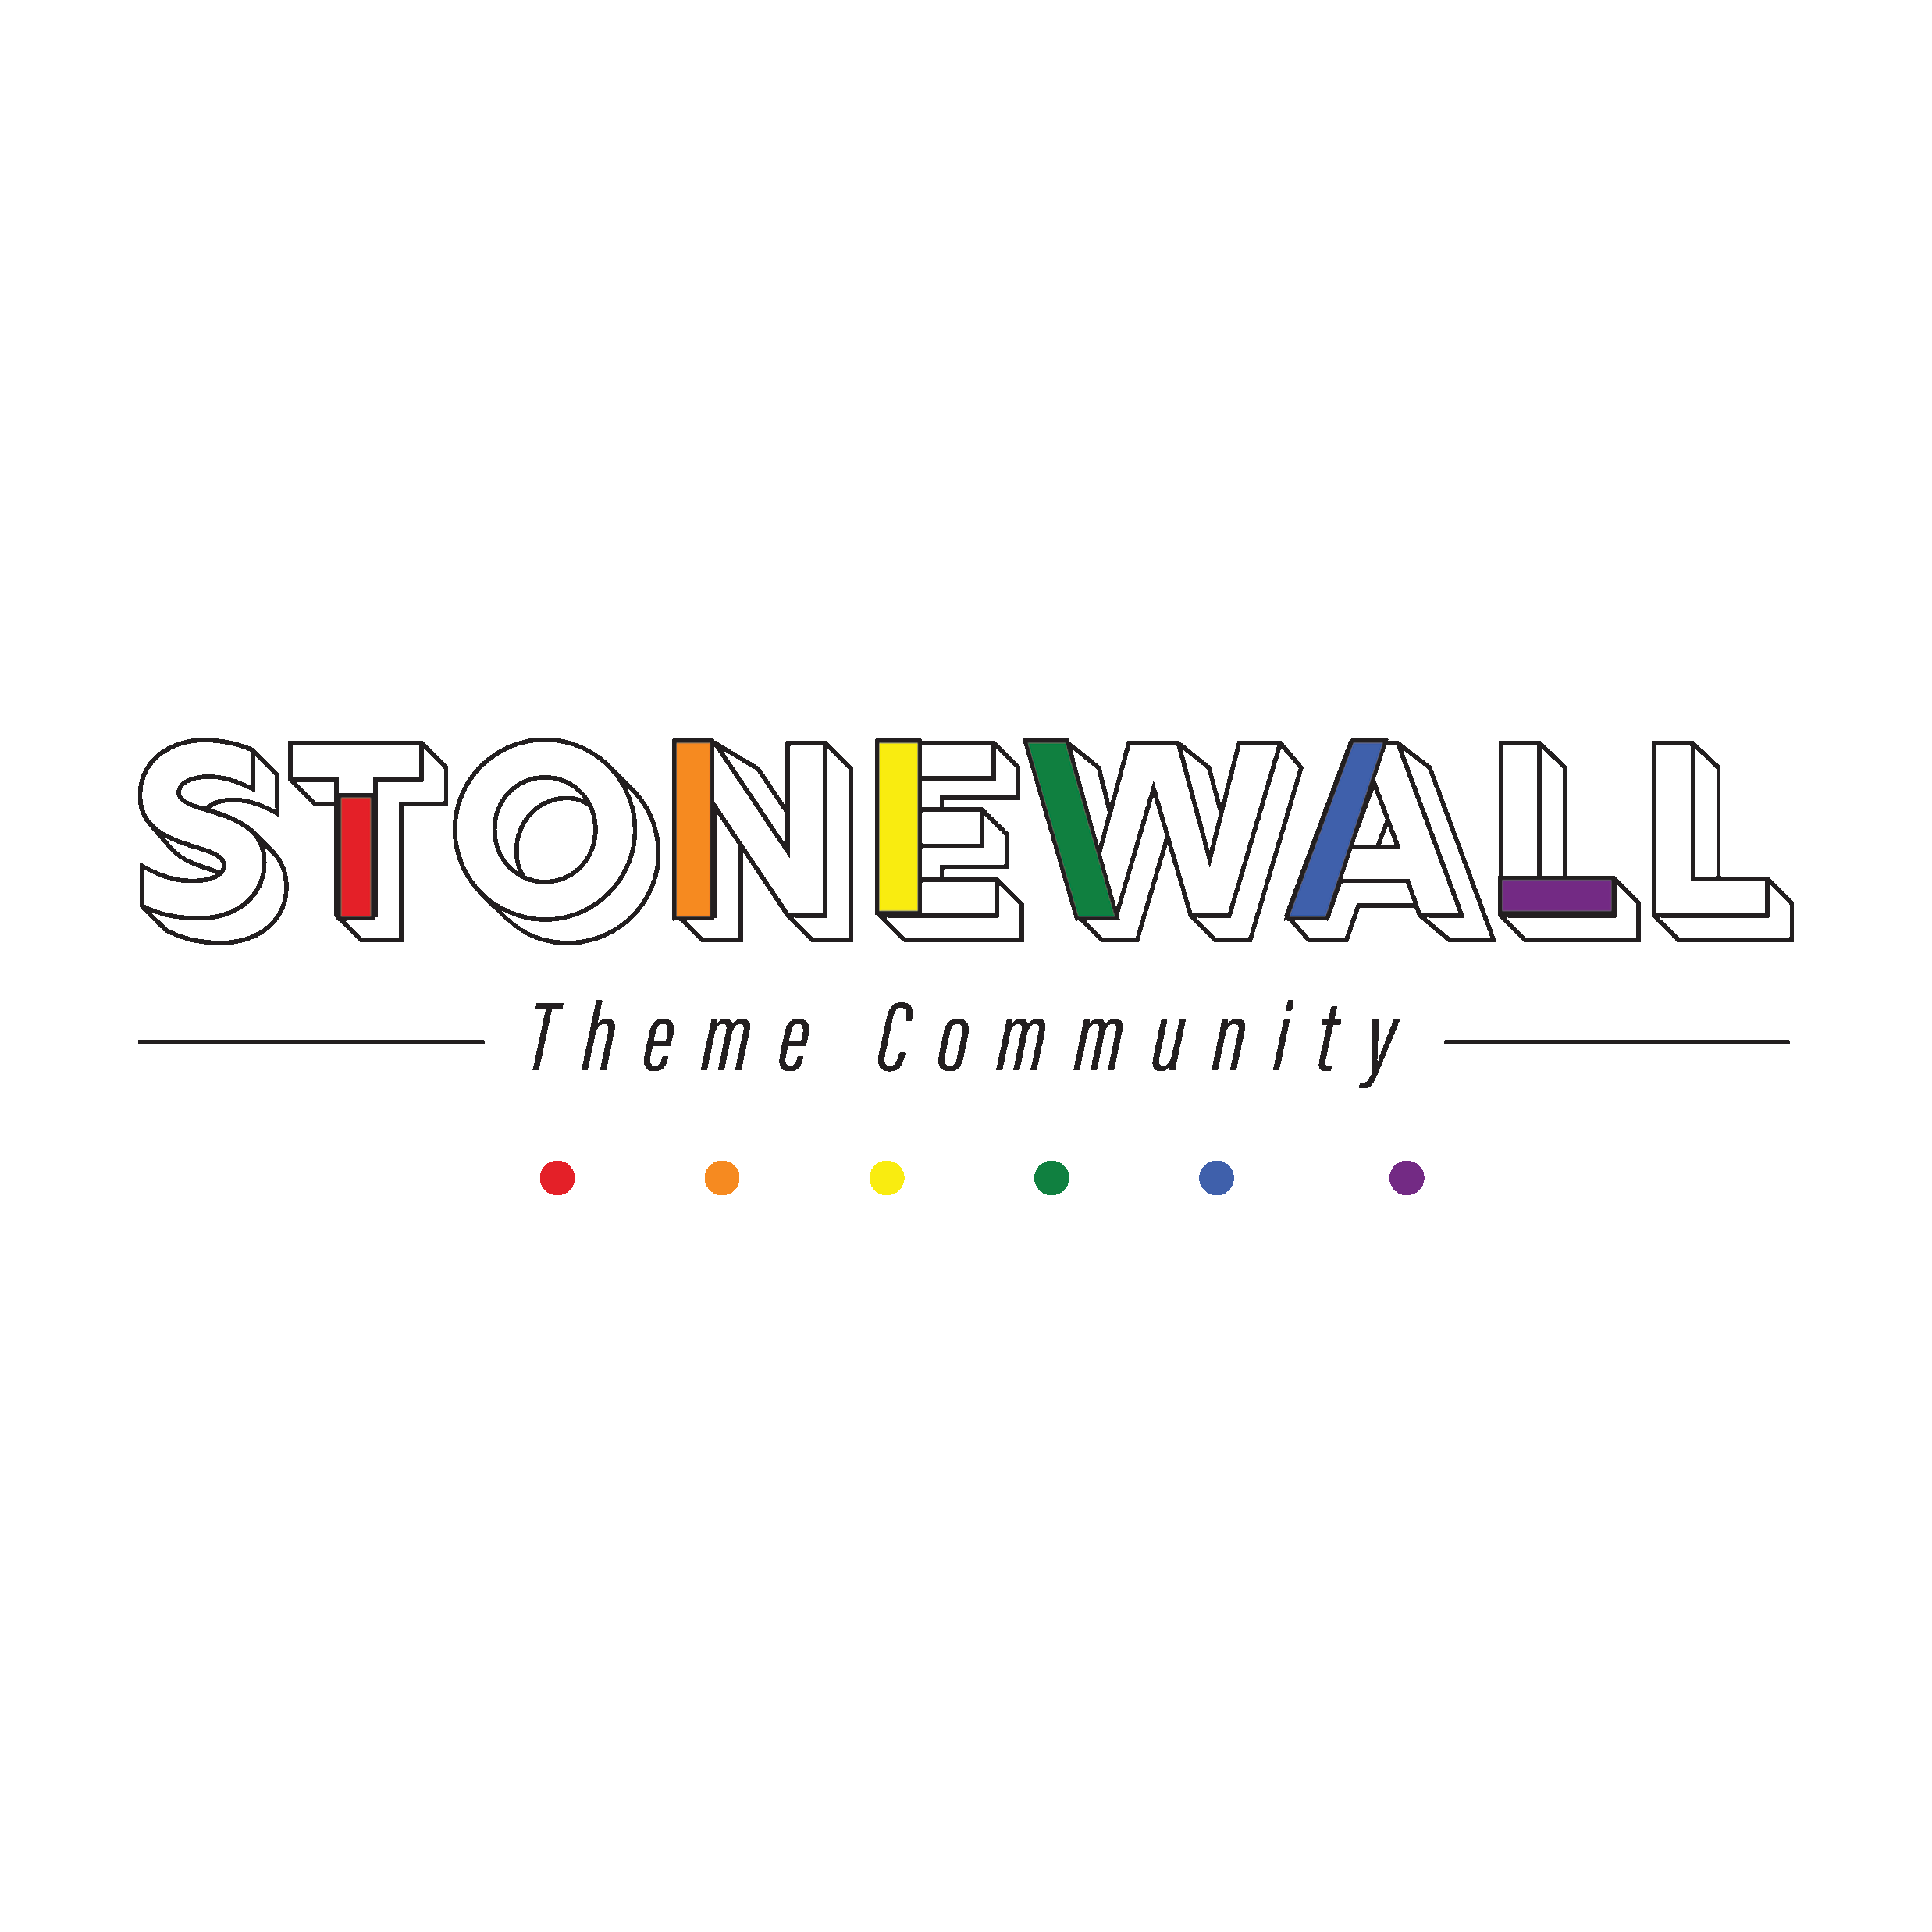 stonewall theme community logo